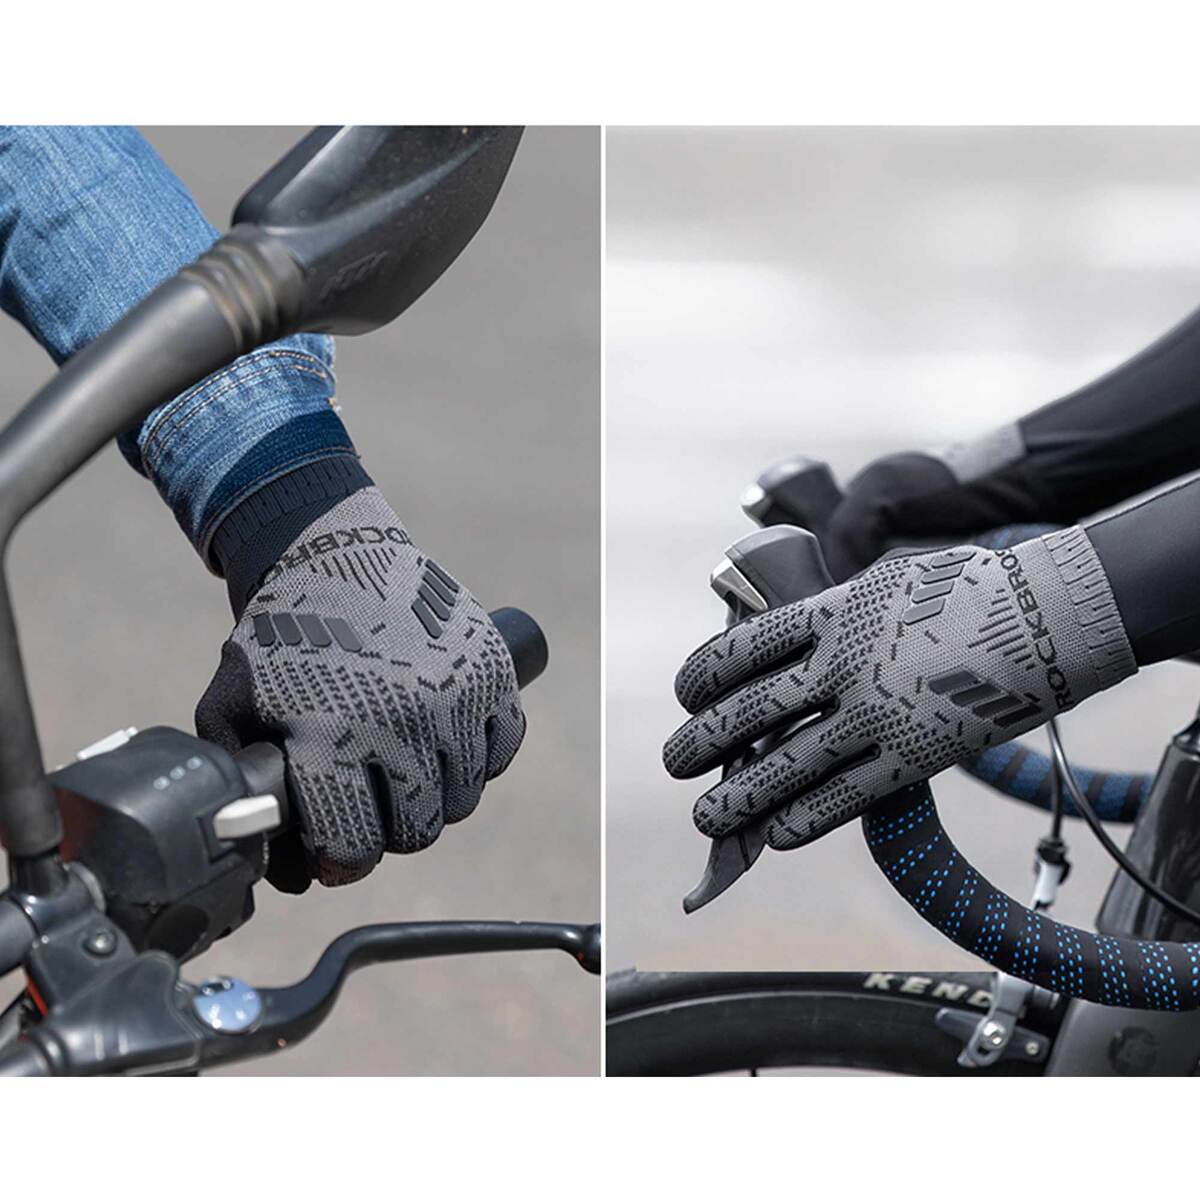 ROCKBROS Spring And Autumn Long Finger Riding Gloves S2551 Medium